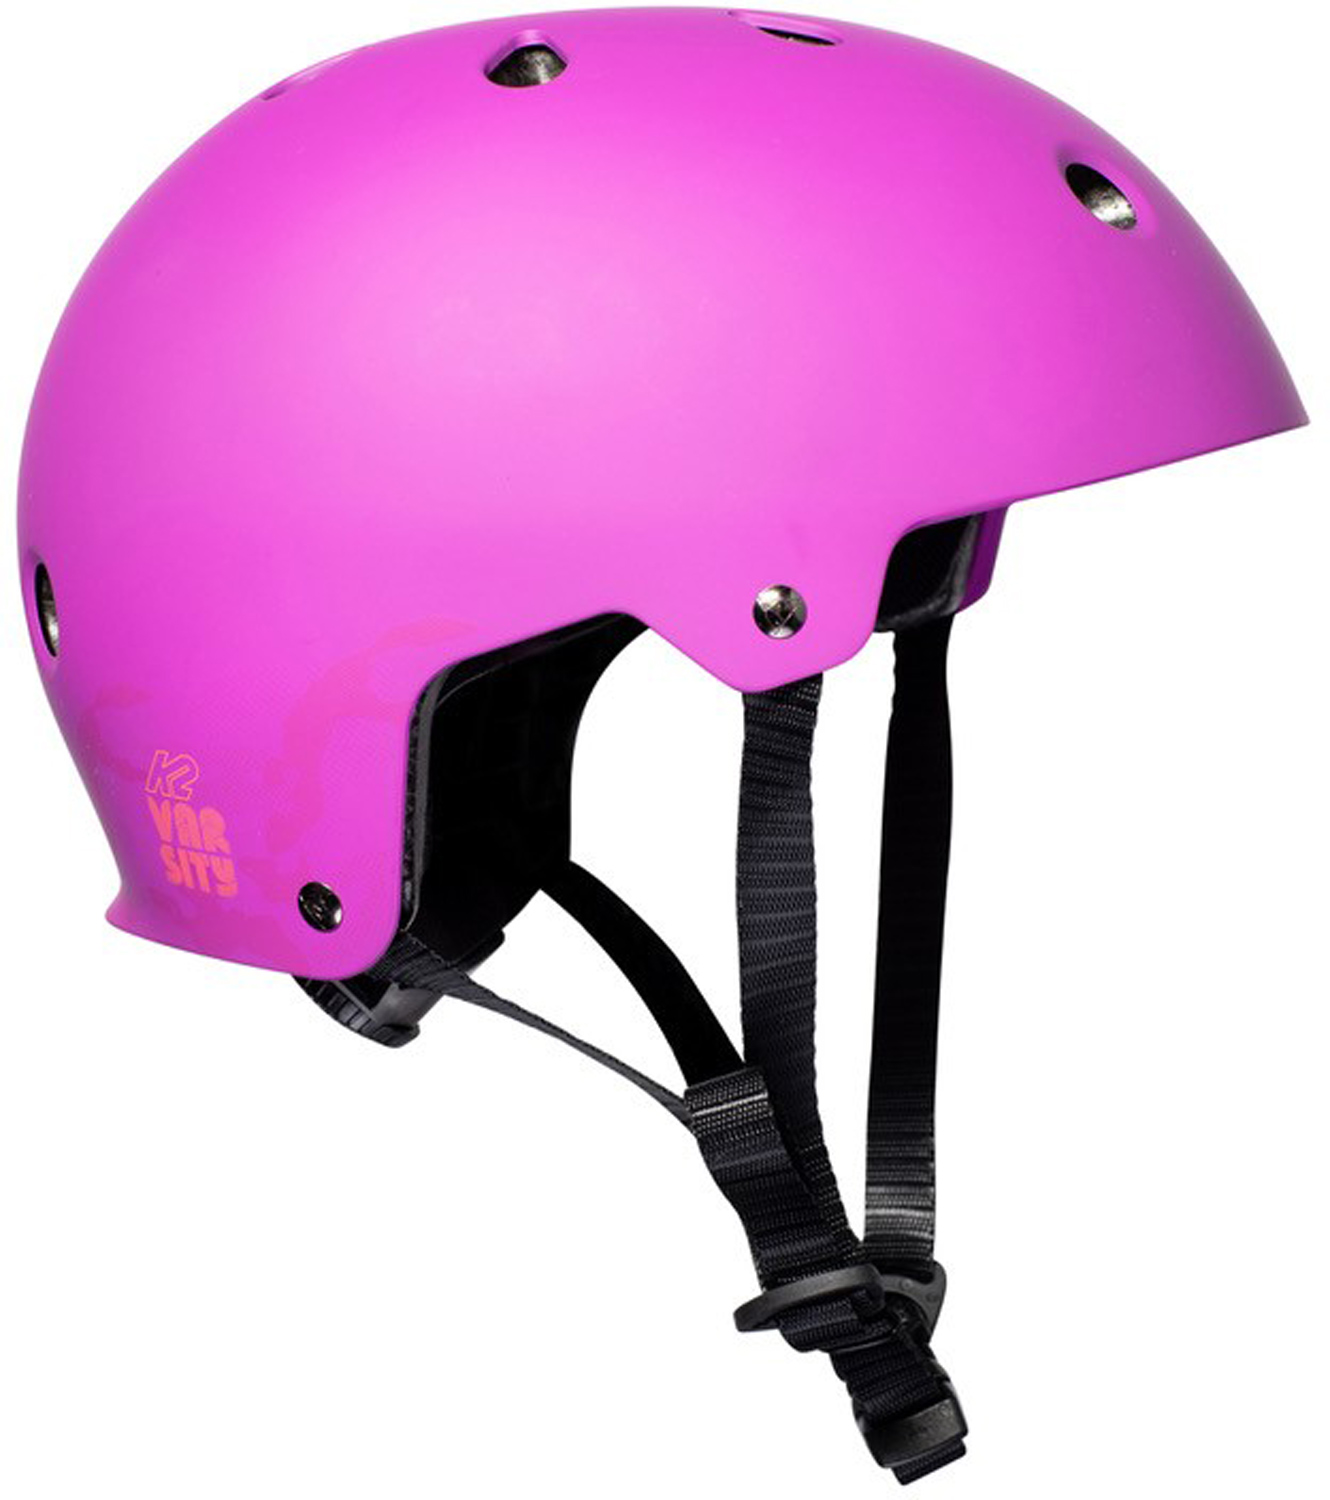 Rollschuh Helm